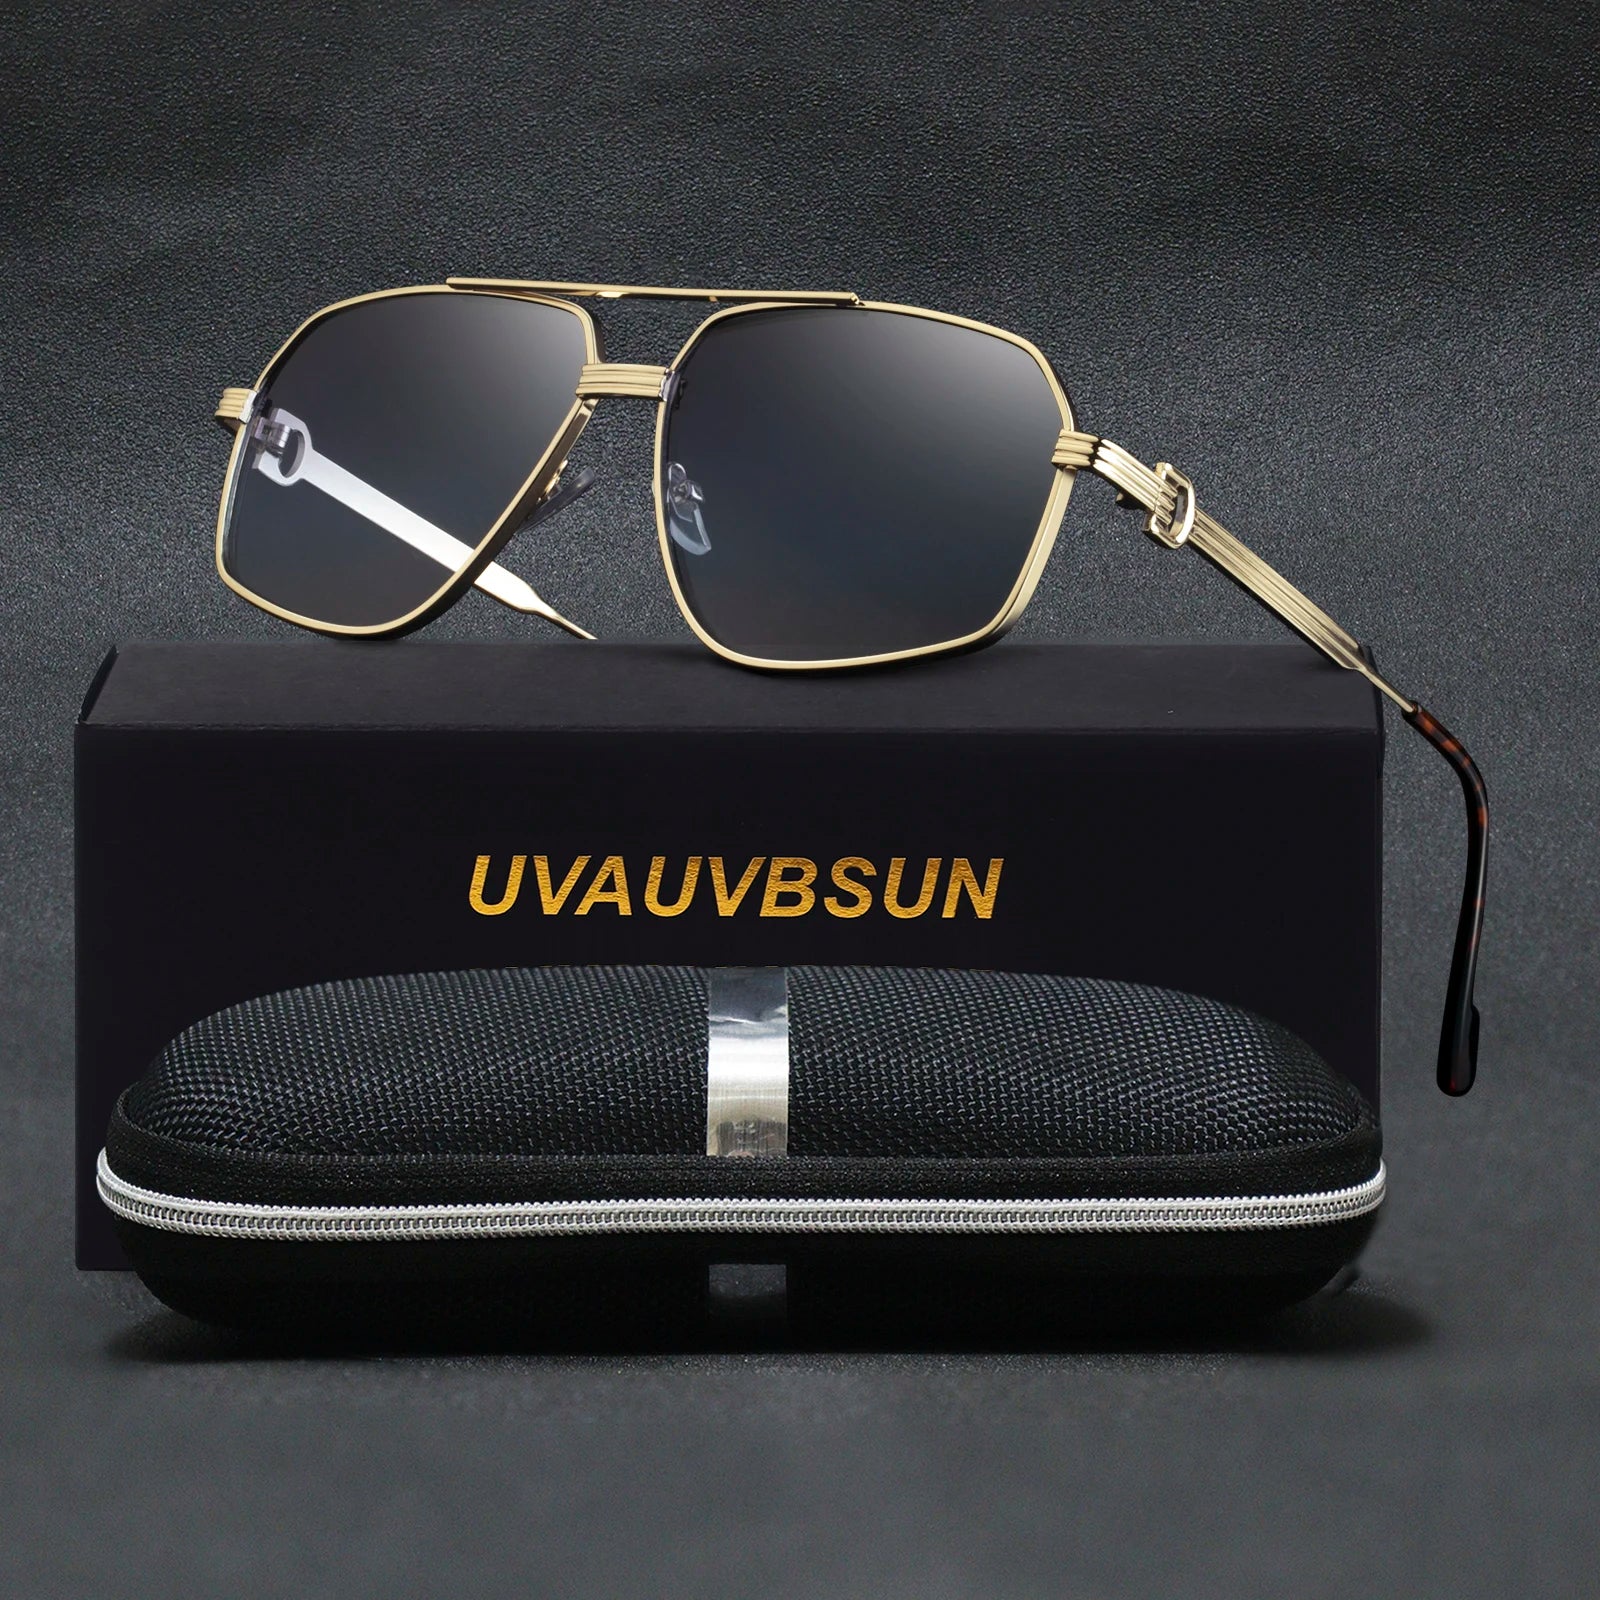 Double Beam HD Sunglasses Retro Metal Frame Irregular Riding UV400 - TaMNz